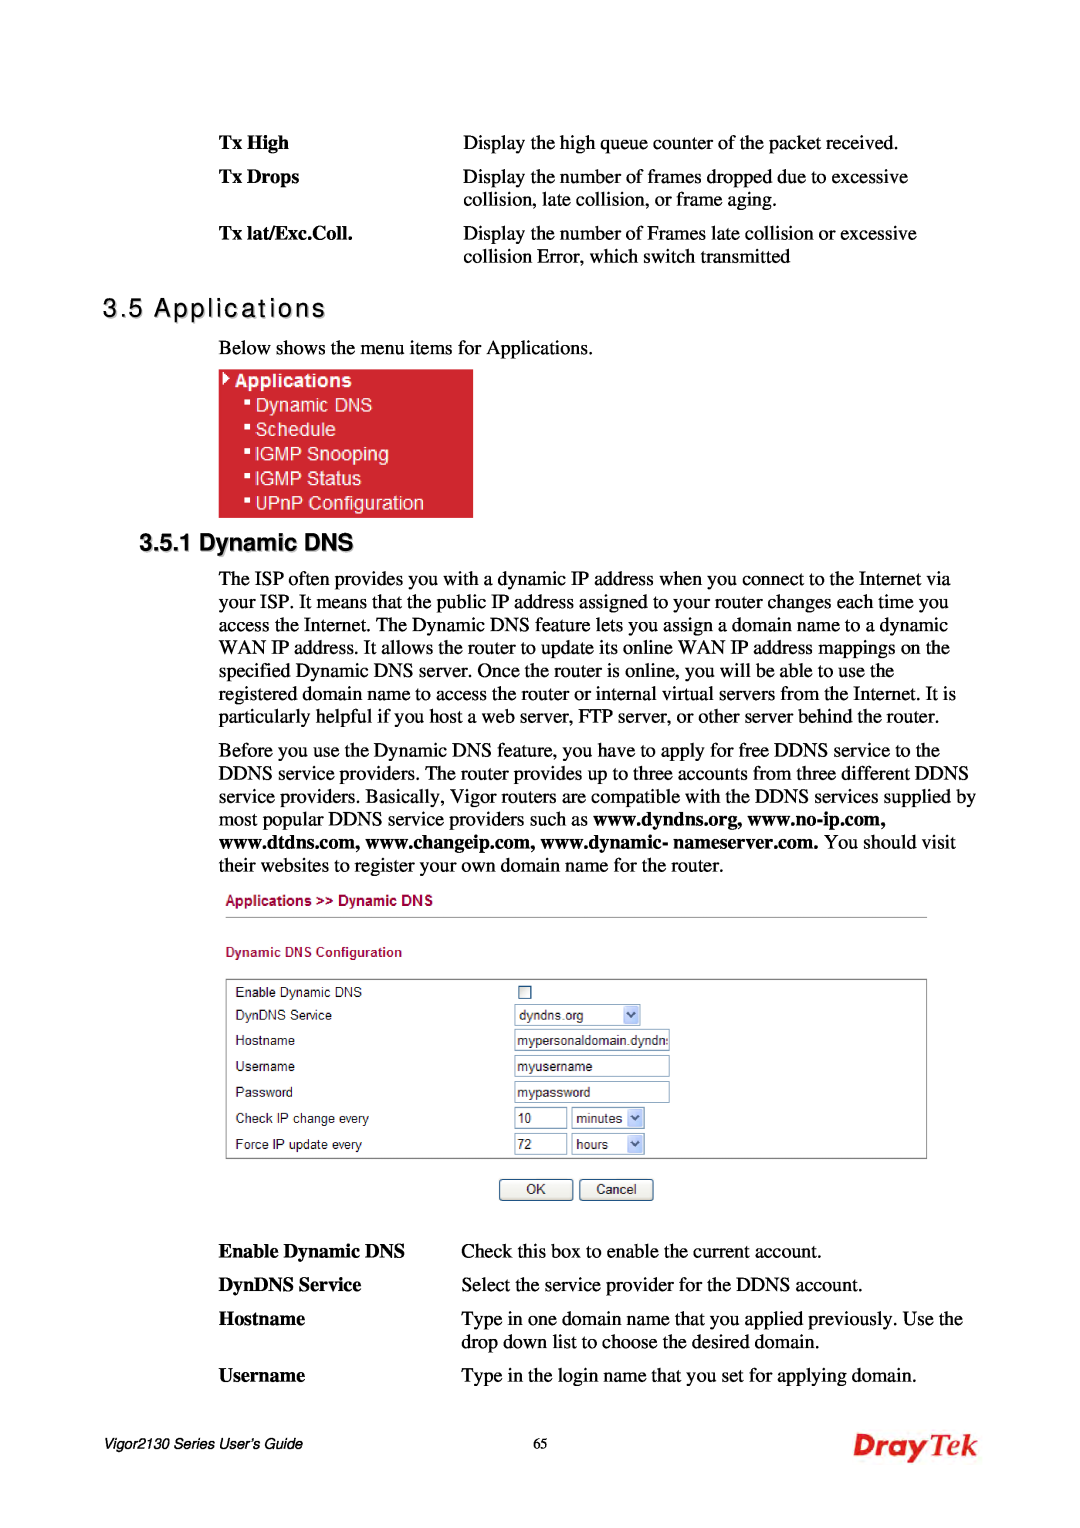 Draytek 2130 manual Applications, Dynamic DNS 